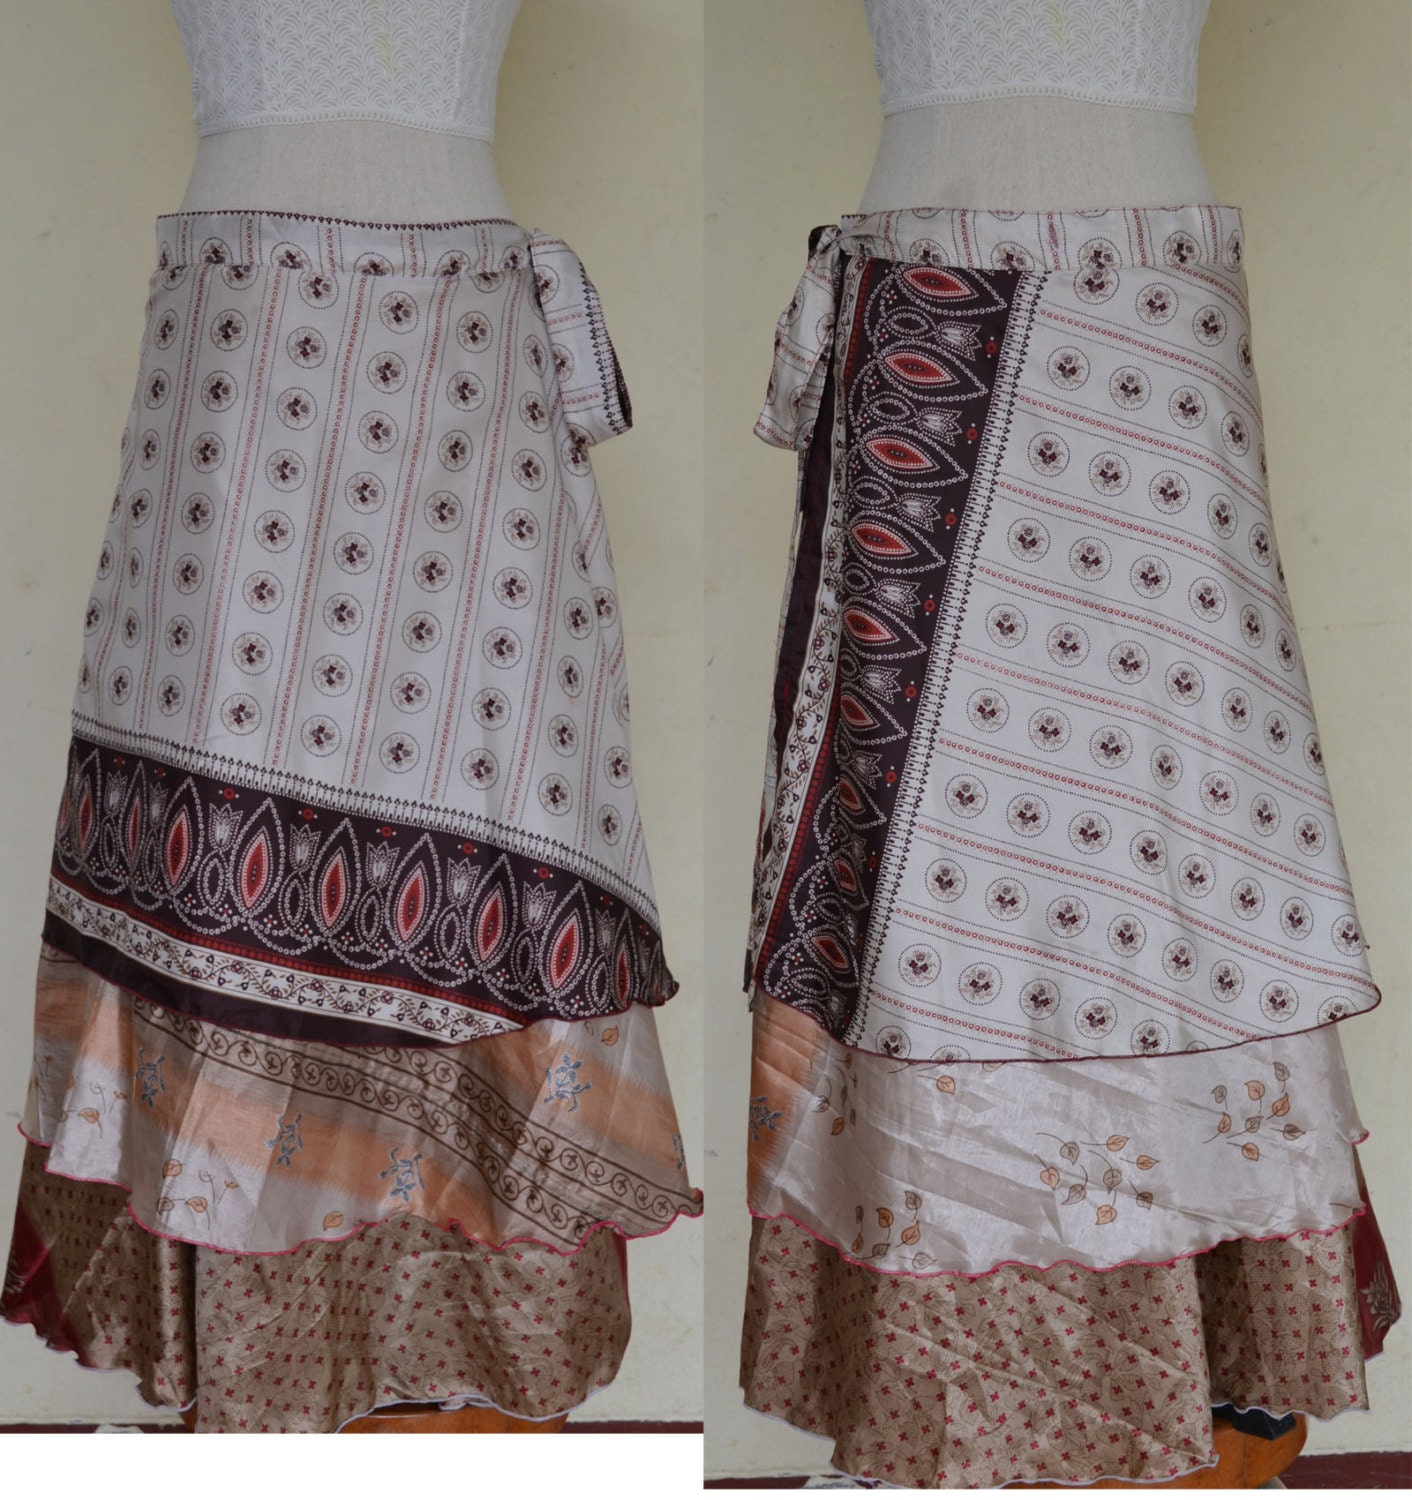 3 Layers Long Wrap skirt India Sari Hippie Gypsy Boho Drance